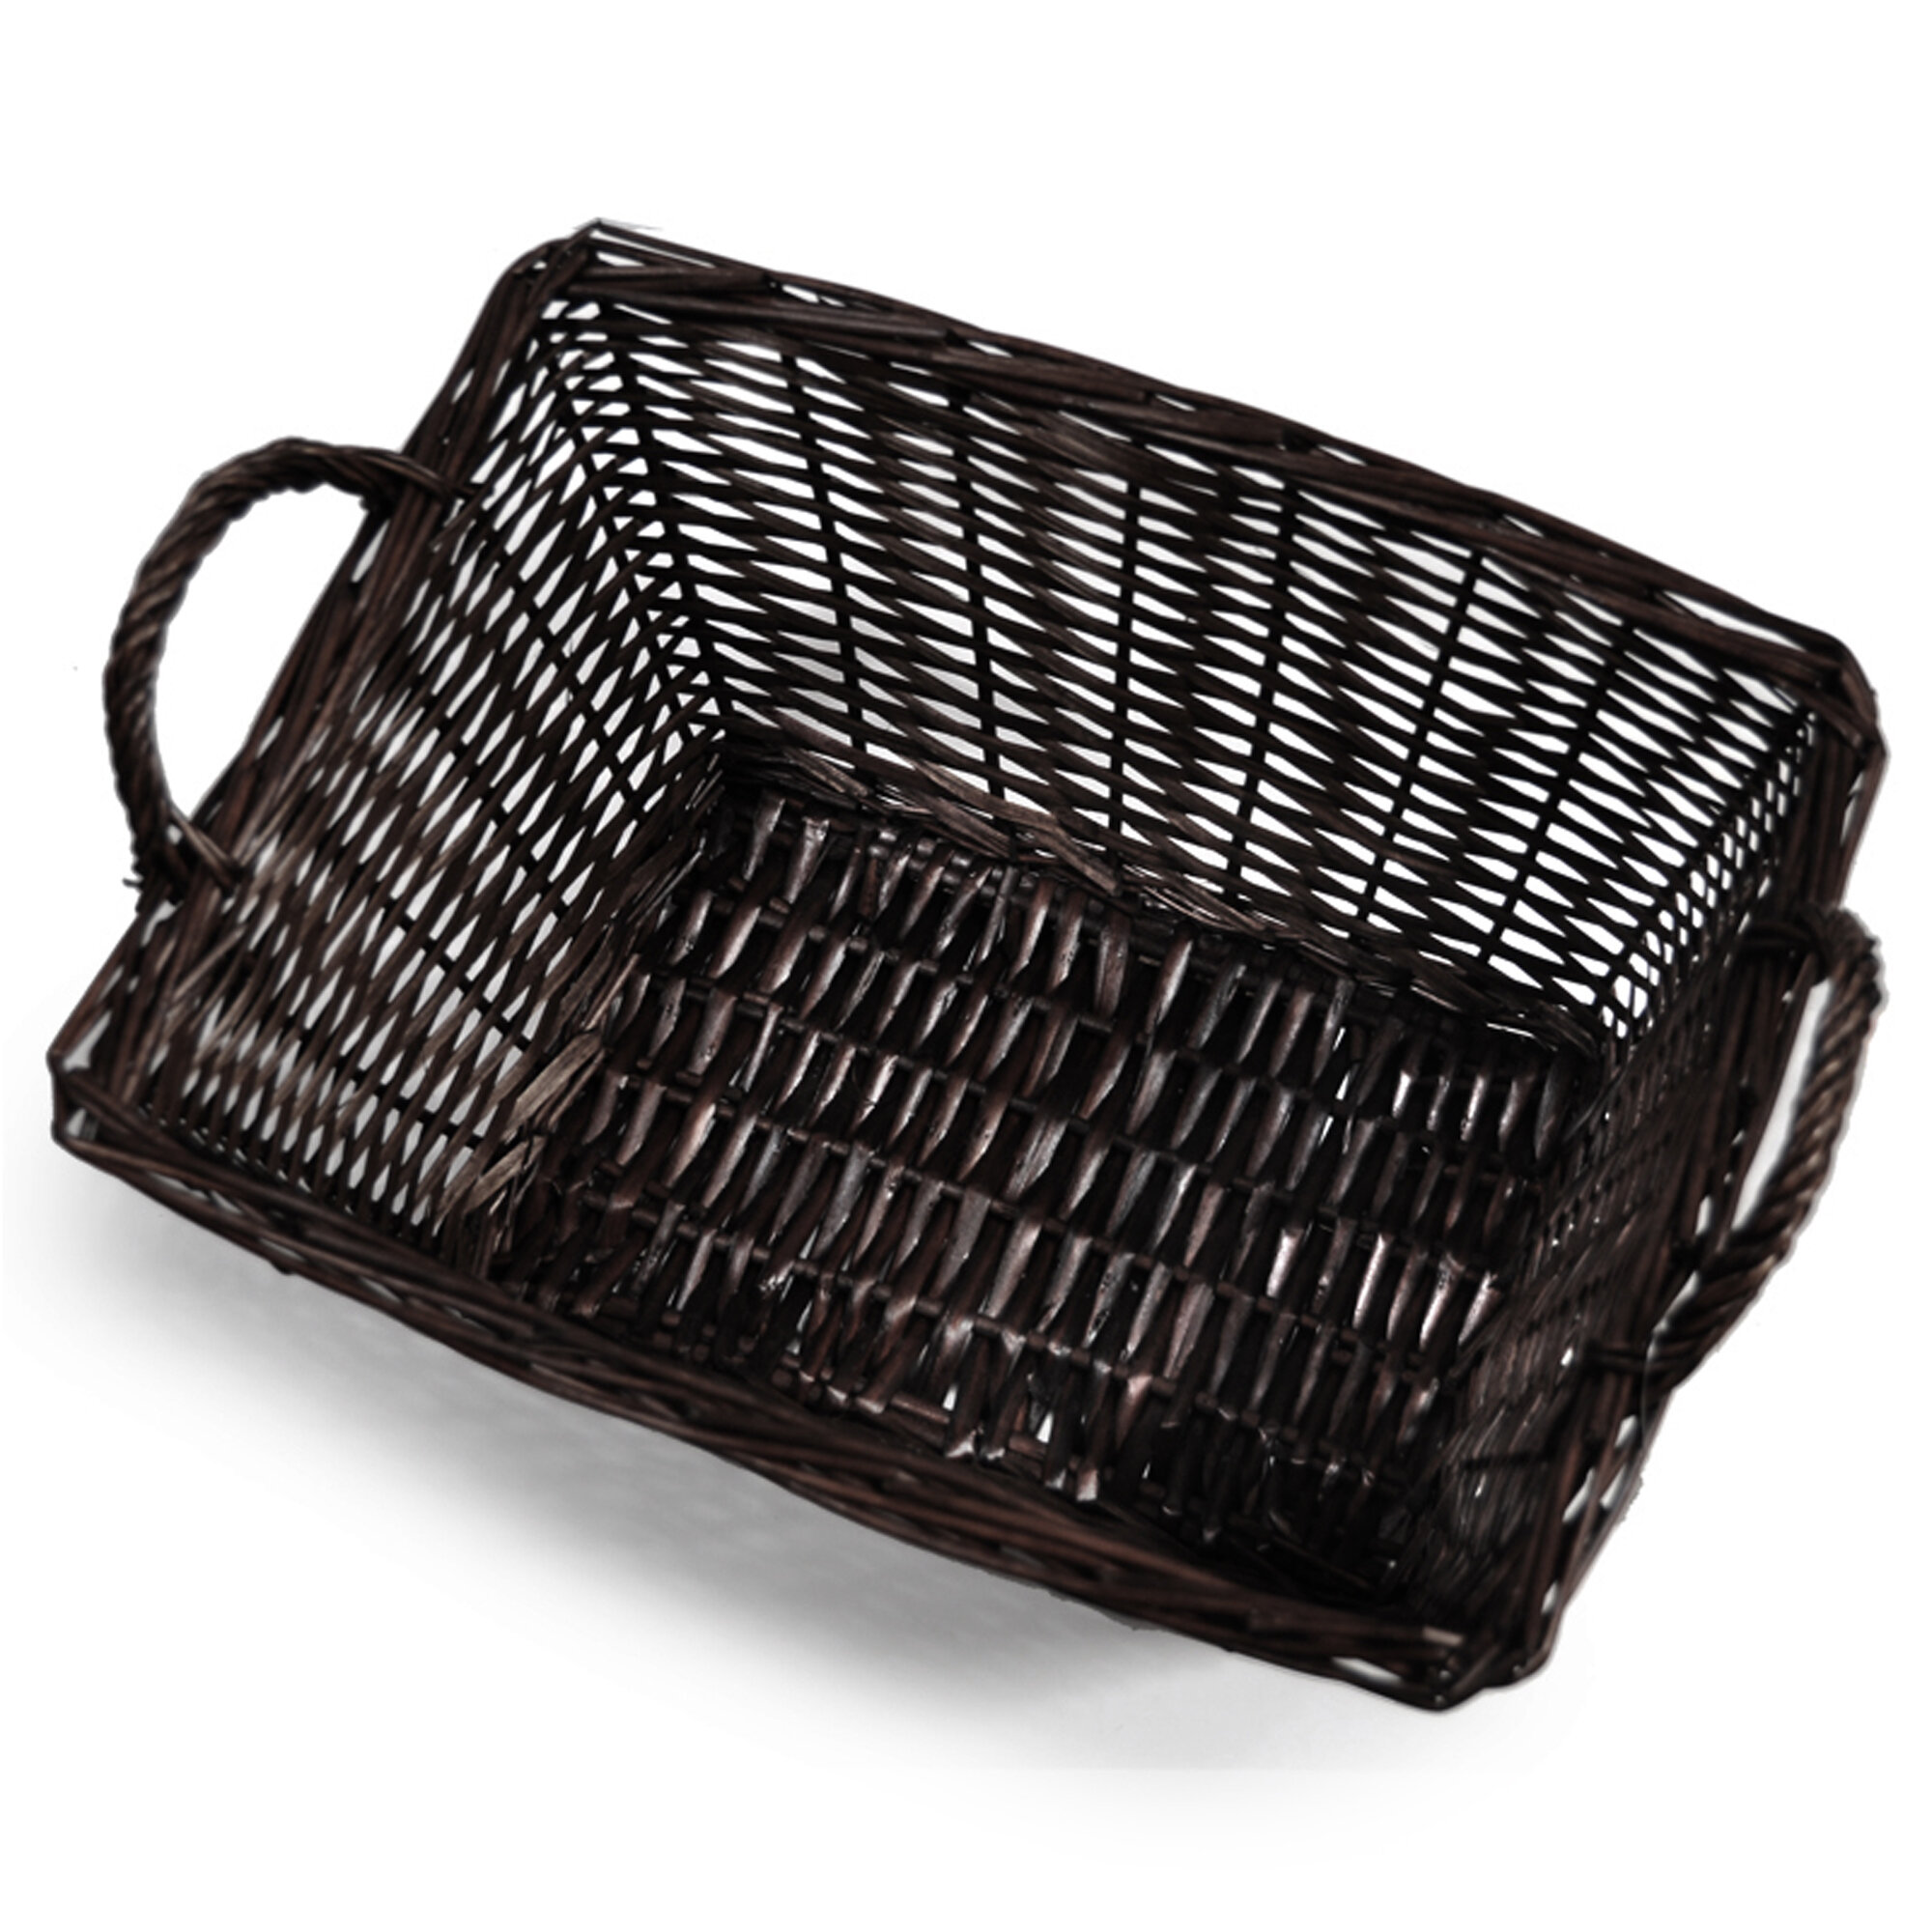 utility basket